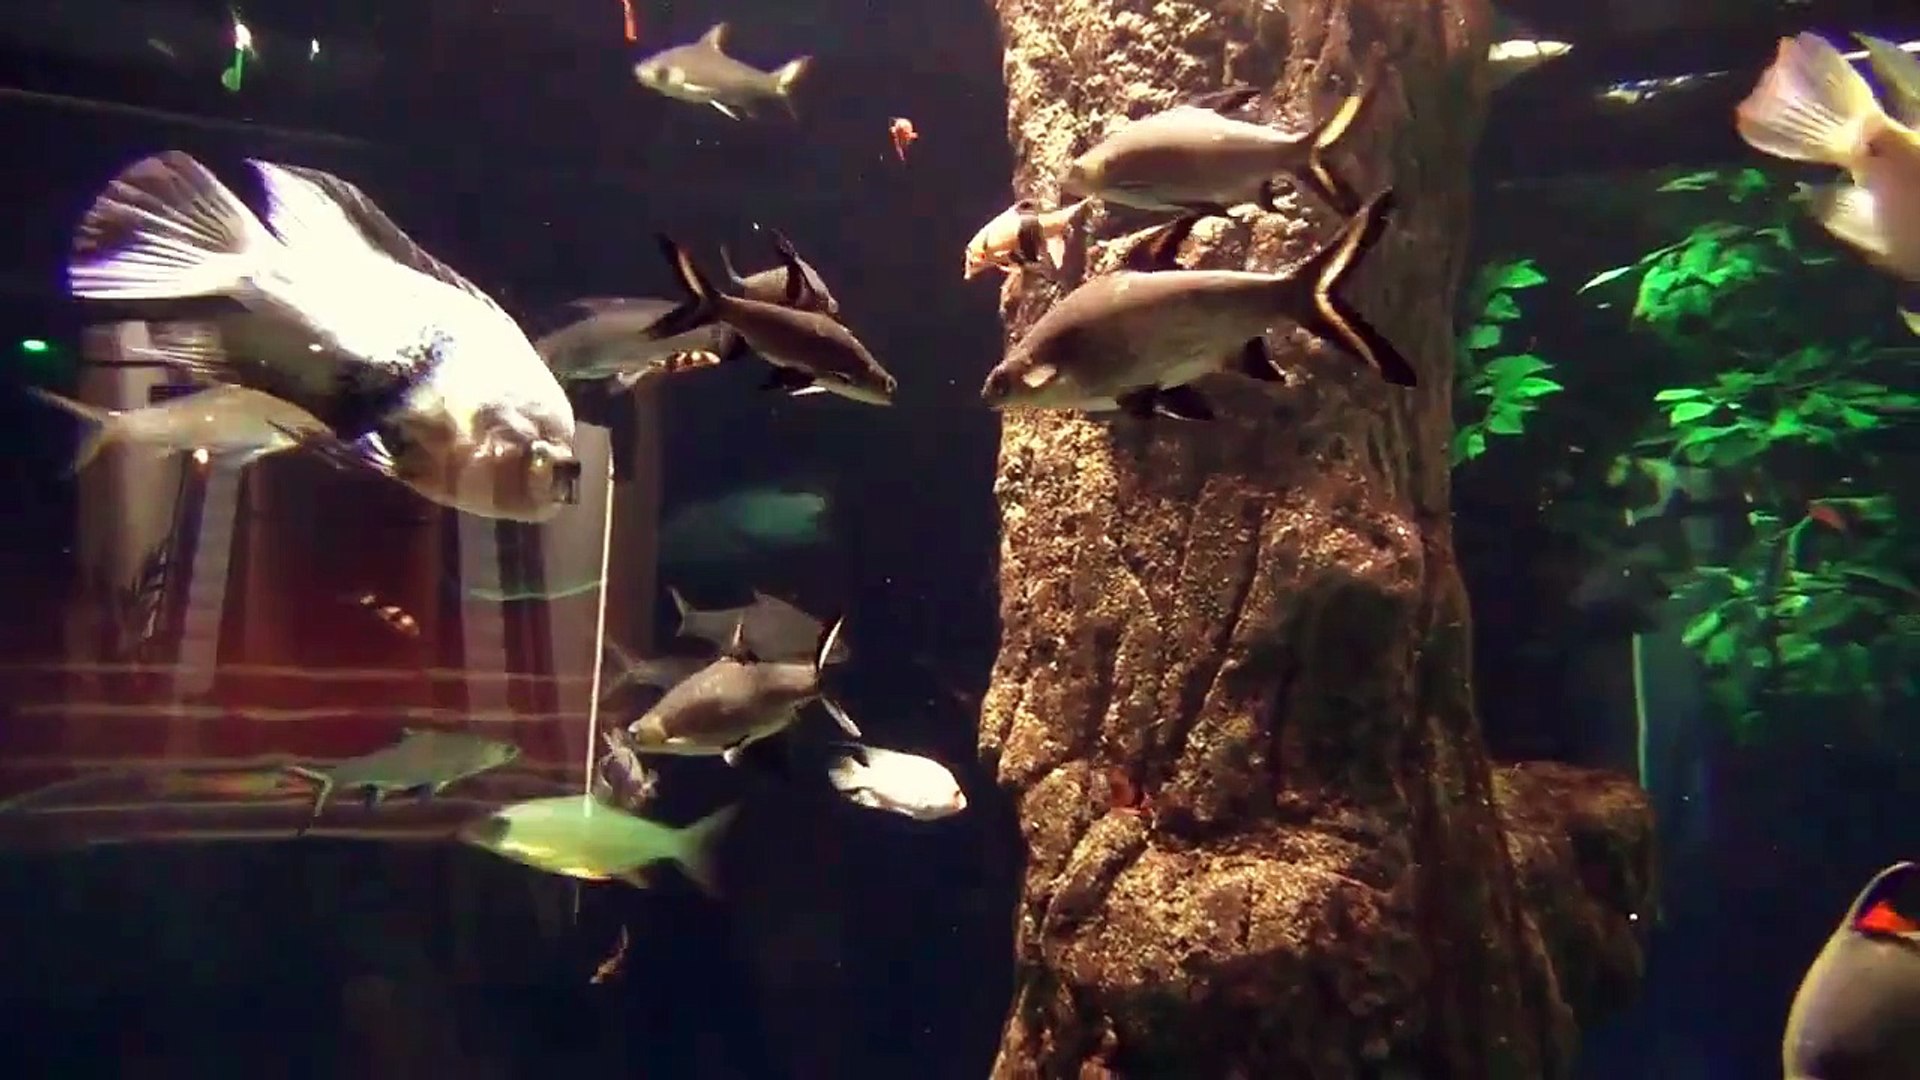 Aquascaping ideas Aquarium fish videos HD music aquascaping ideas & Planted Tropical Fish videos